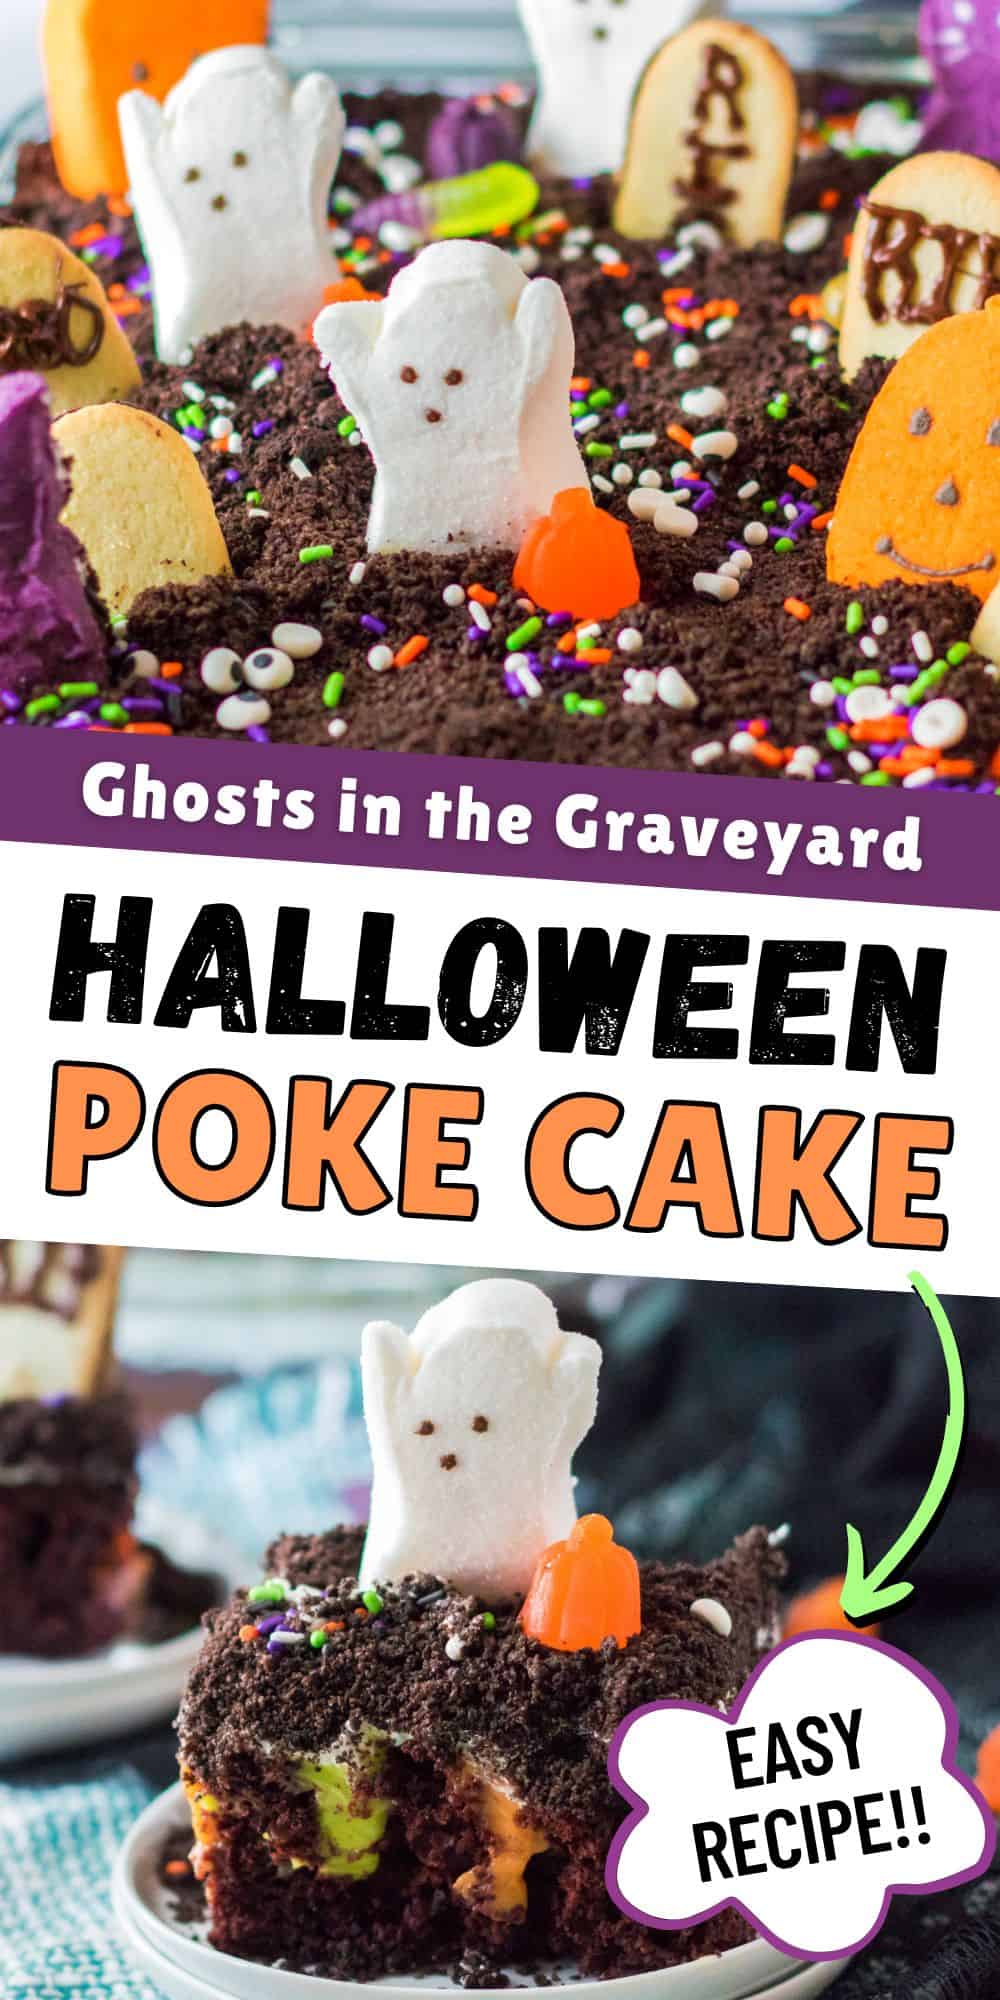 Ghosts in the Graveyard Halloween Poke Cake.